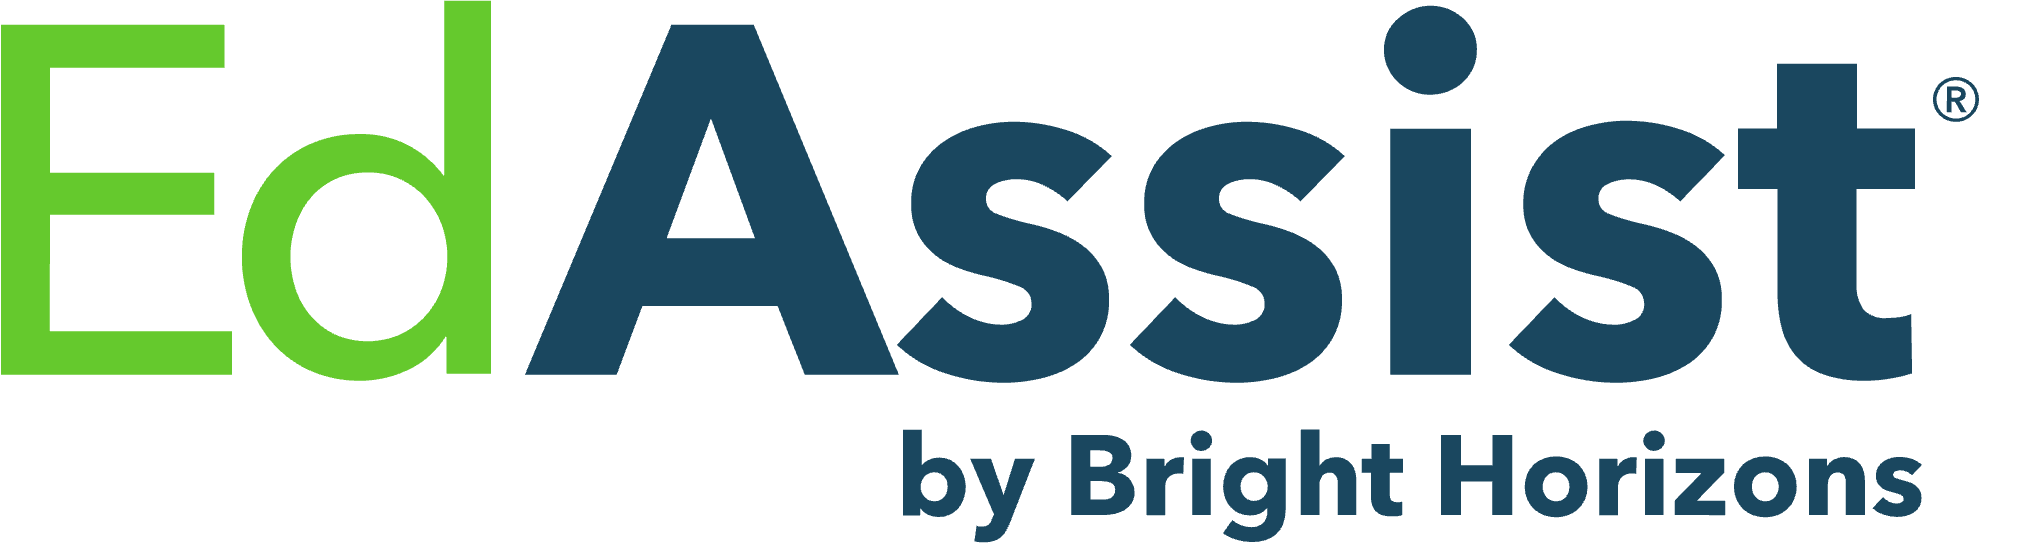 Ed Assist logo.